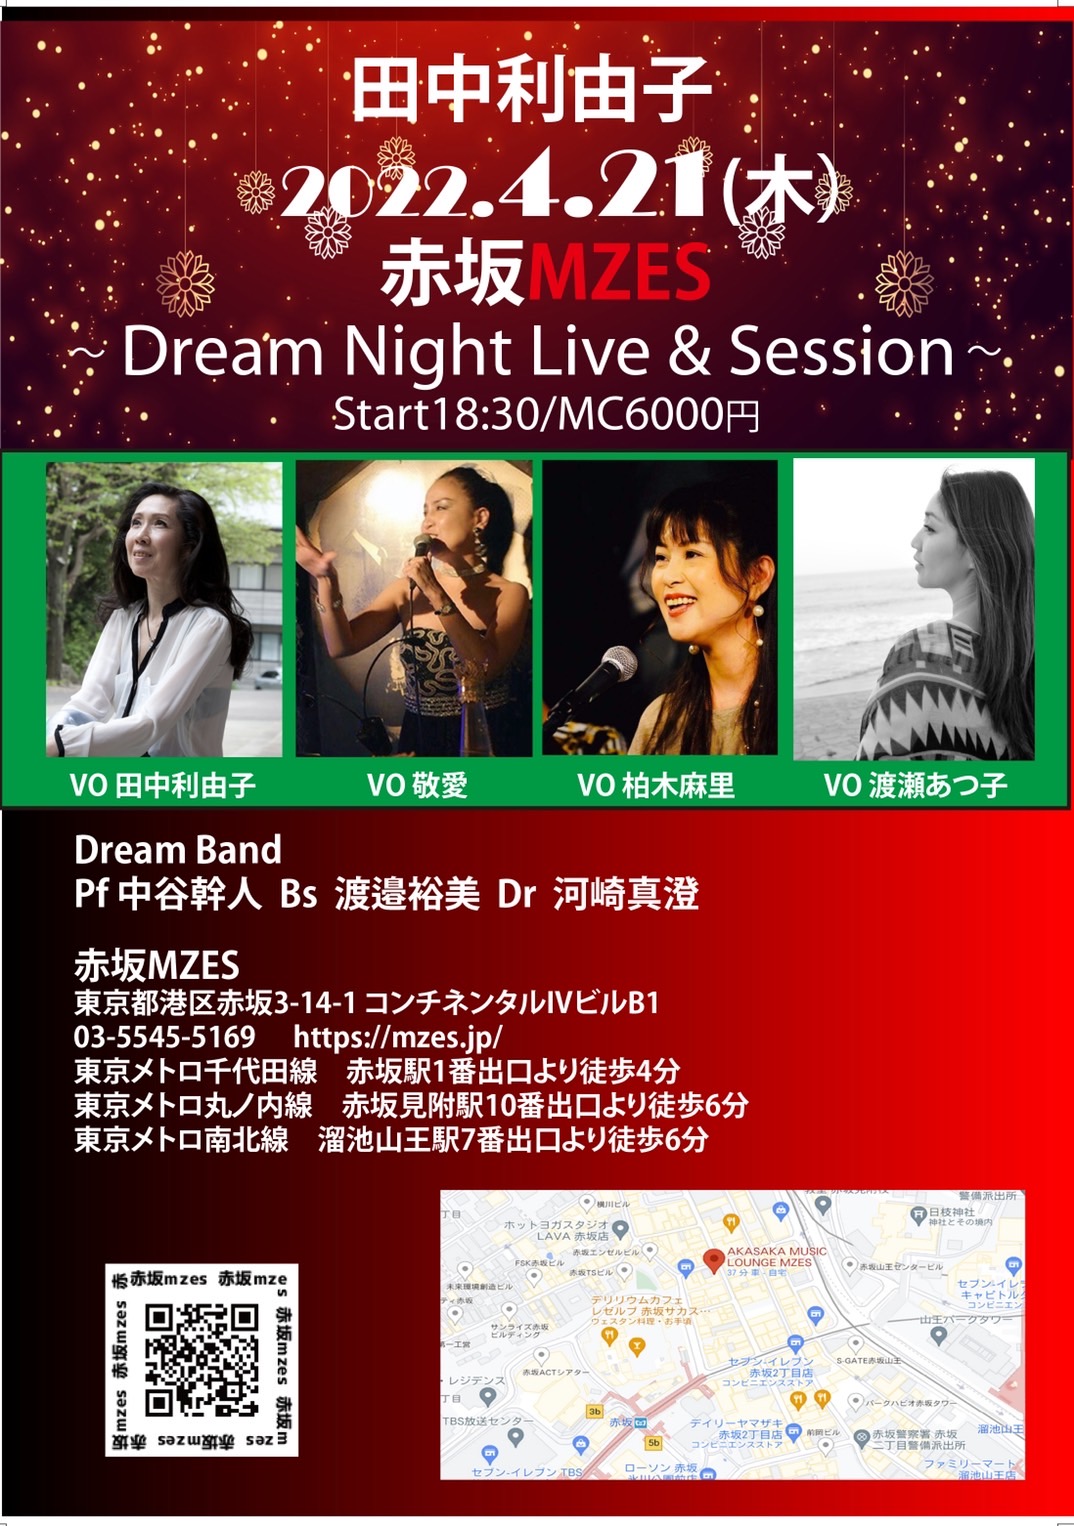 Dream Night Live & Session